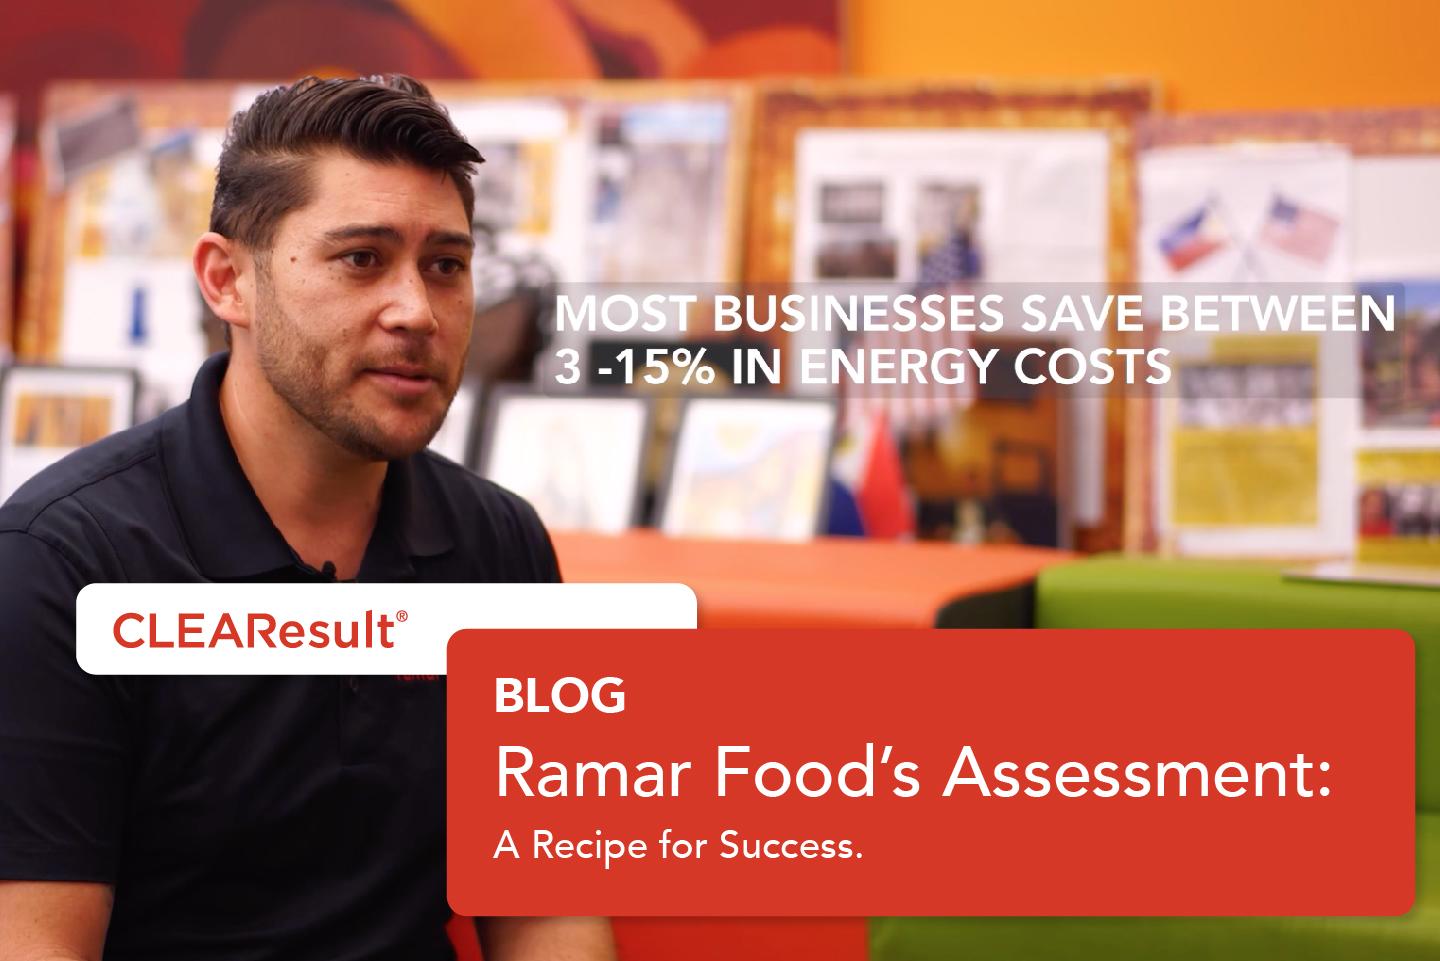 Ramar Foods’ Assessment: A recipe for success